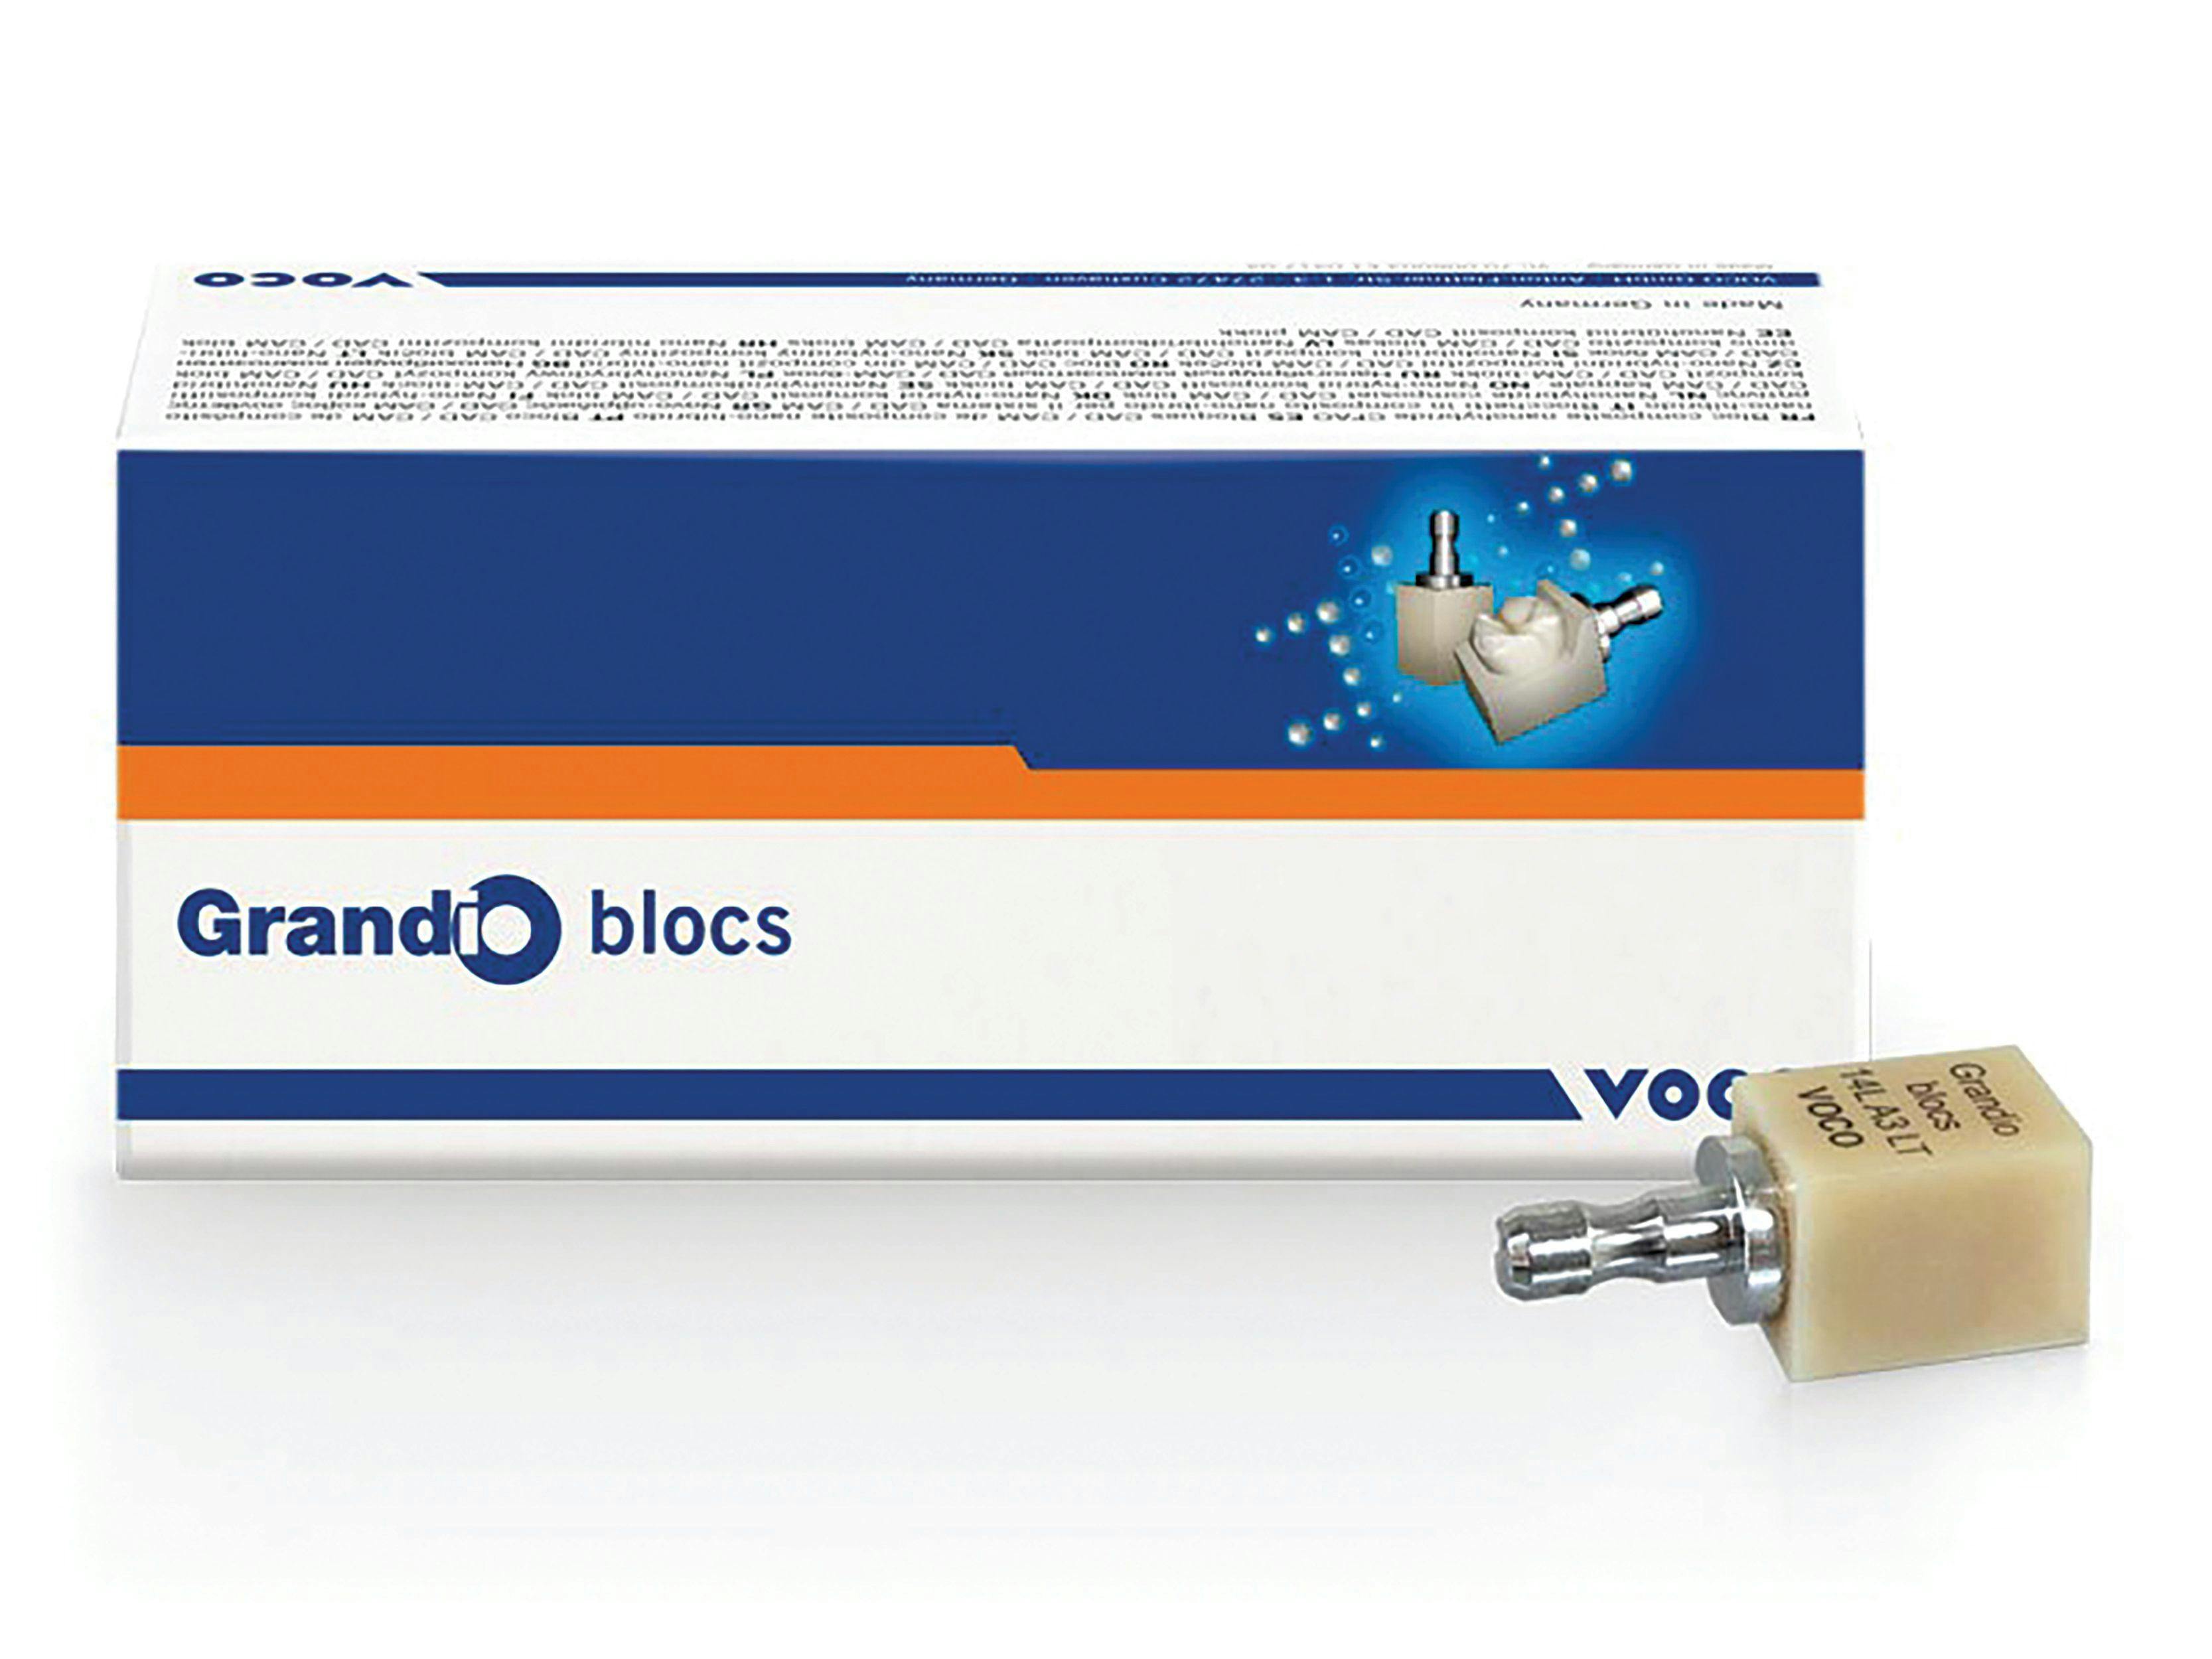 VOCO’s Grandio blocs nano-ceramic hybrid CAD/CAM blocks. 